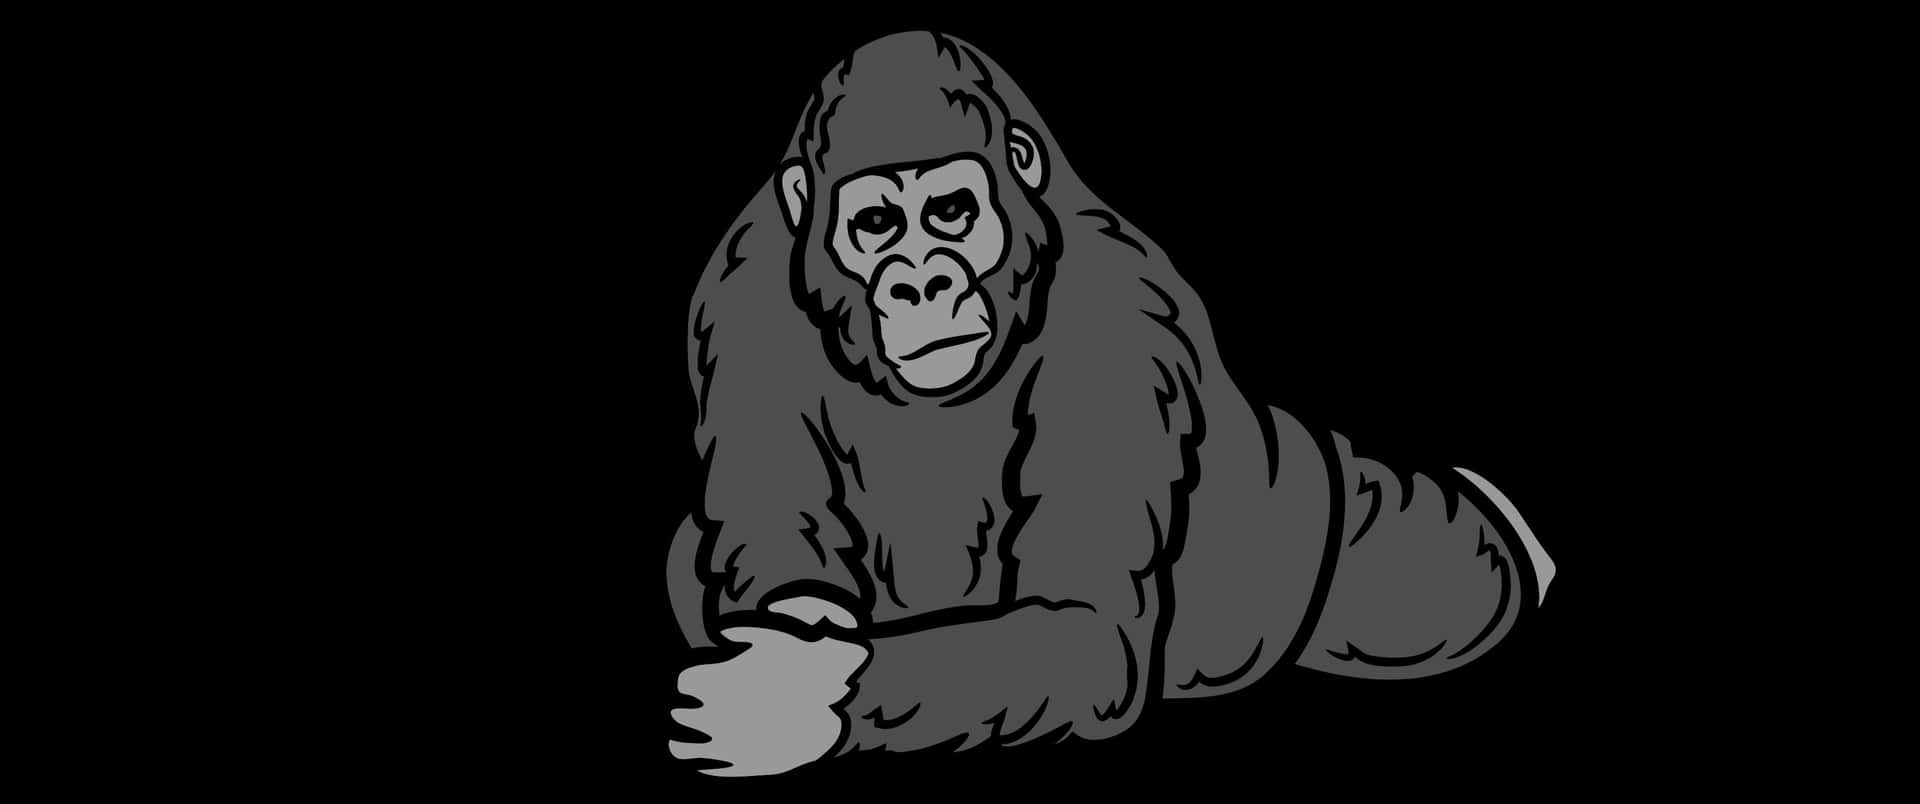 3440x1440p Gorilla Animal Drawing Background